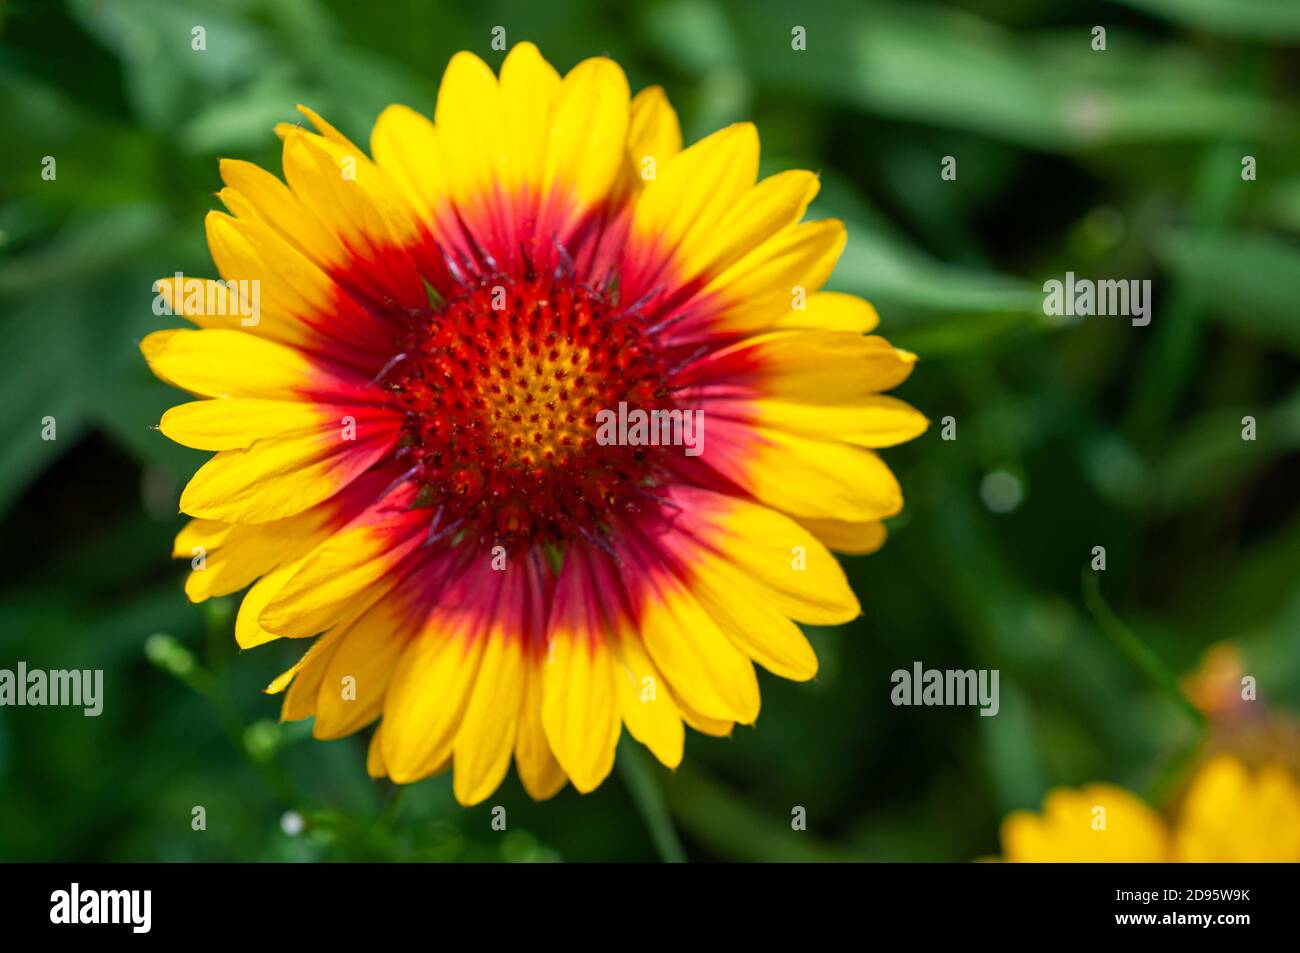 Gaillardia spinous large-flowered on green background copyspace Stock Photo